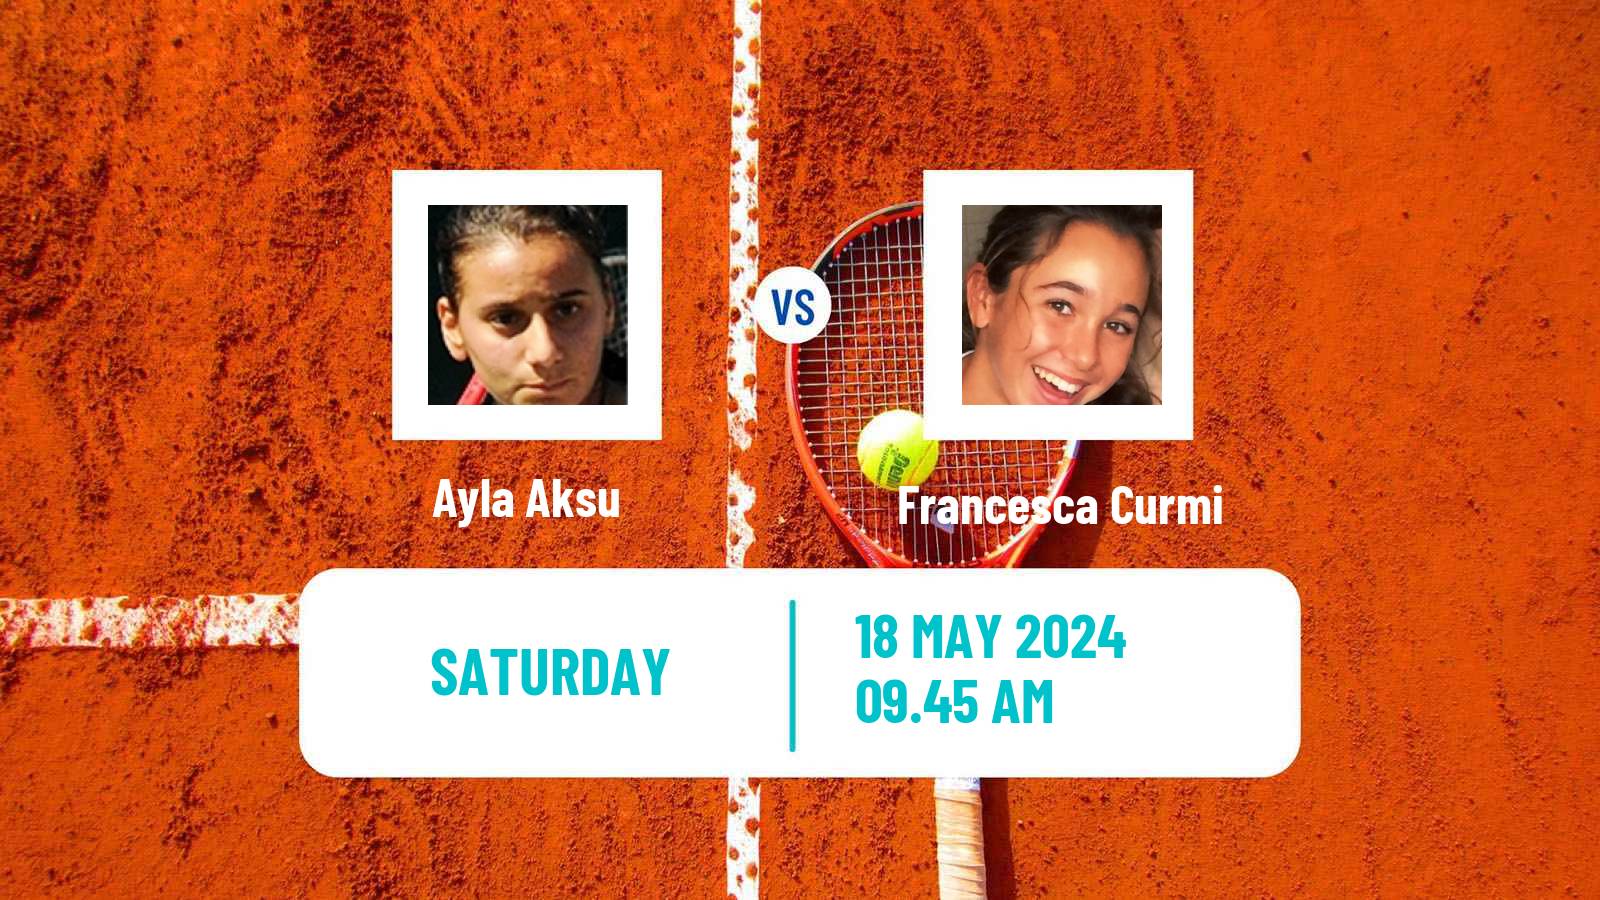 Tennis WTA Rabat Ayla Aksu - Francesca Curmi